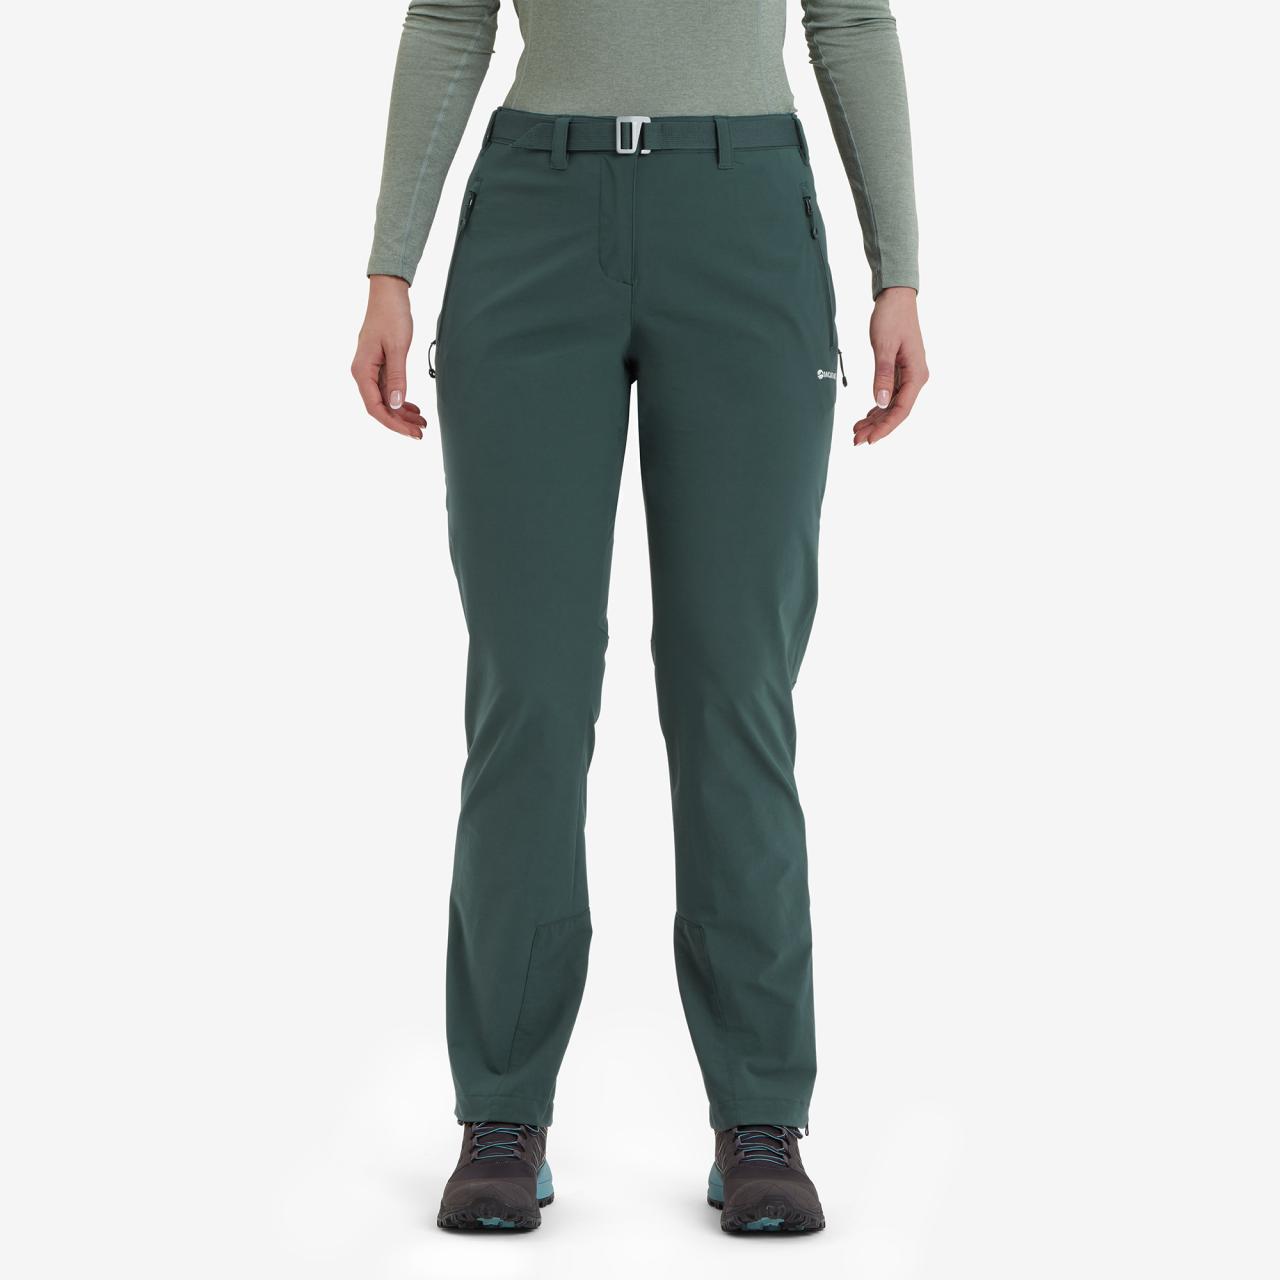 FEM TERRA STRETCH PANTS-R LEG-DEEP FOREST-UK14/L dámské kalhotytmavě zelená